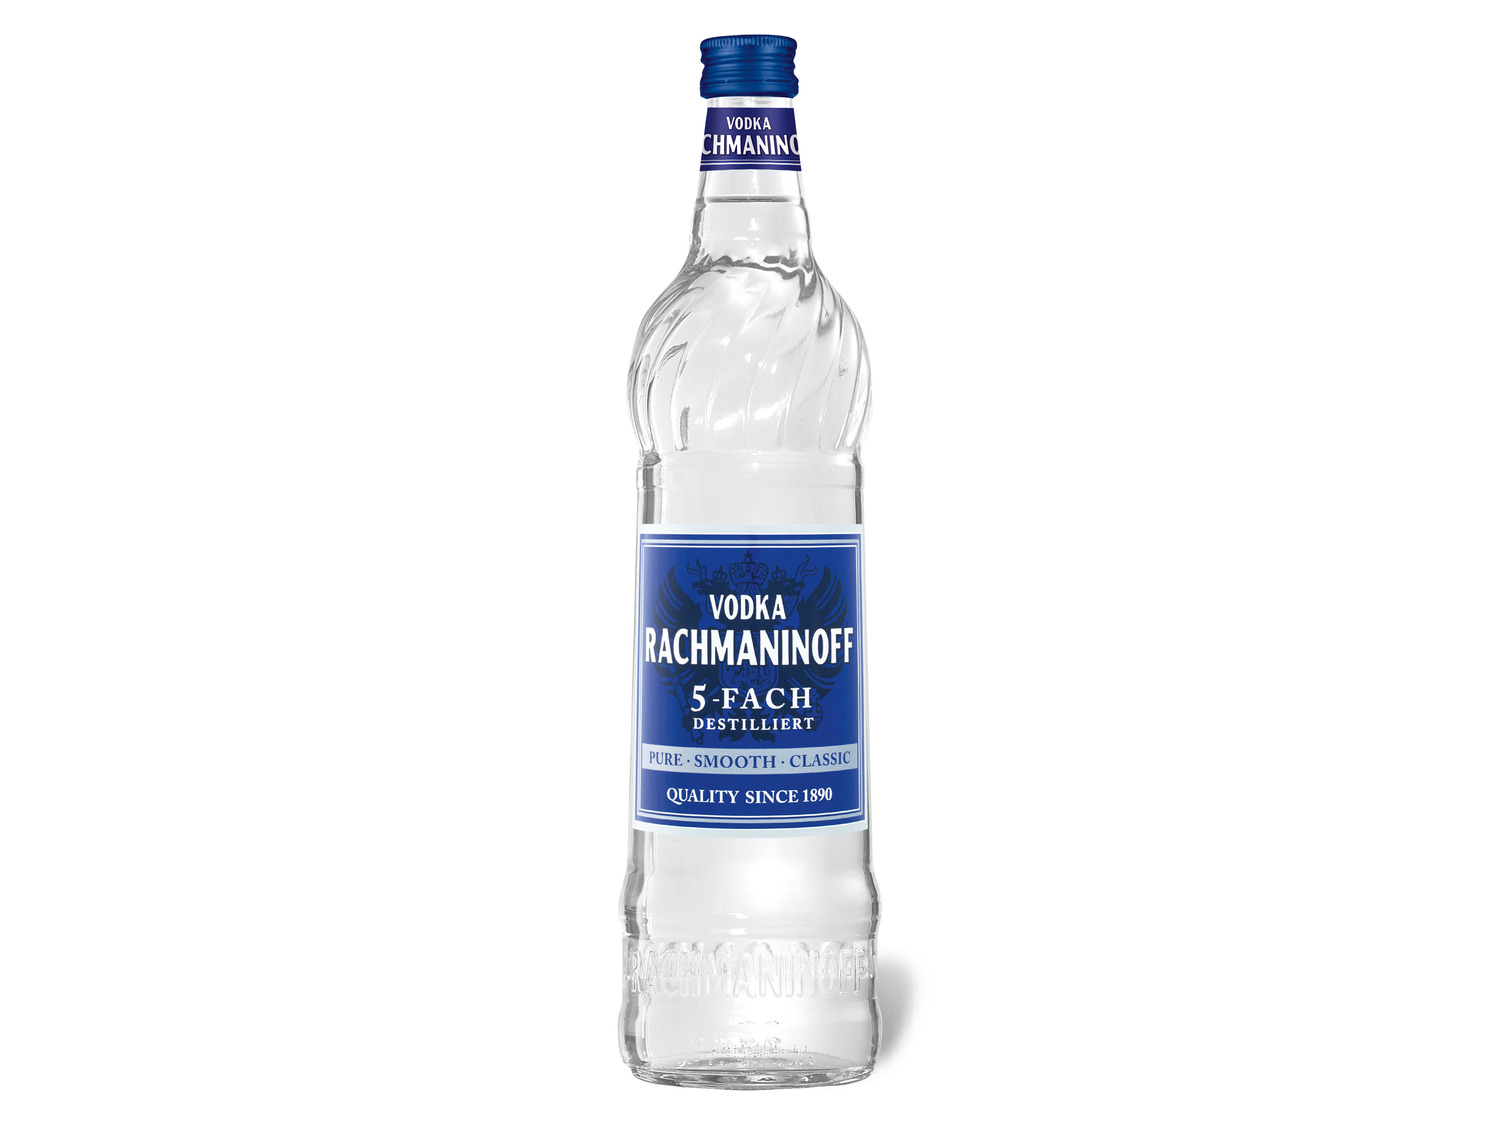 RACHMANINOFF Wodka 5-fach destilliert 40% Vol | LIDL